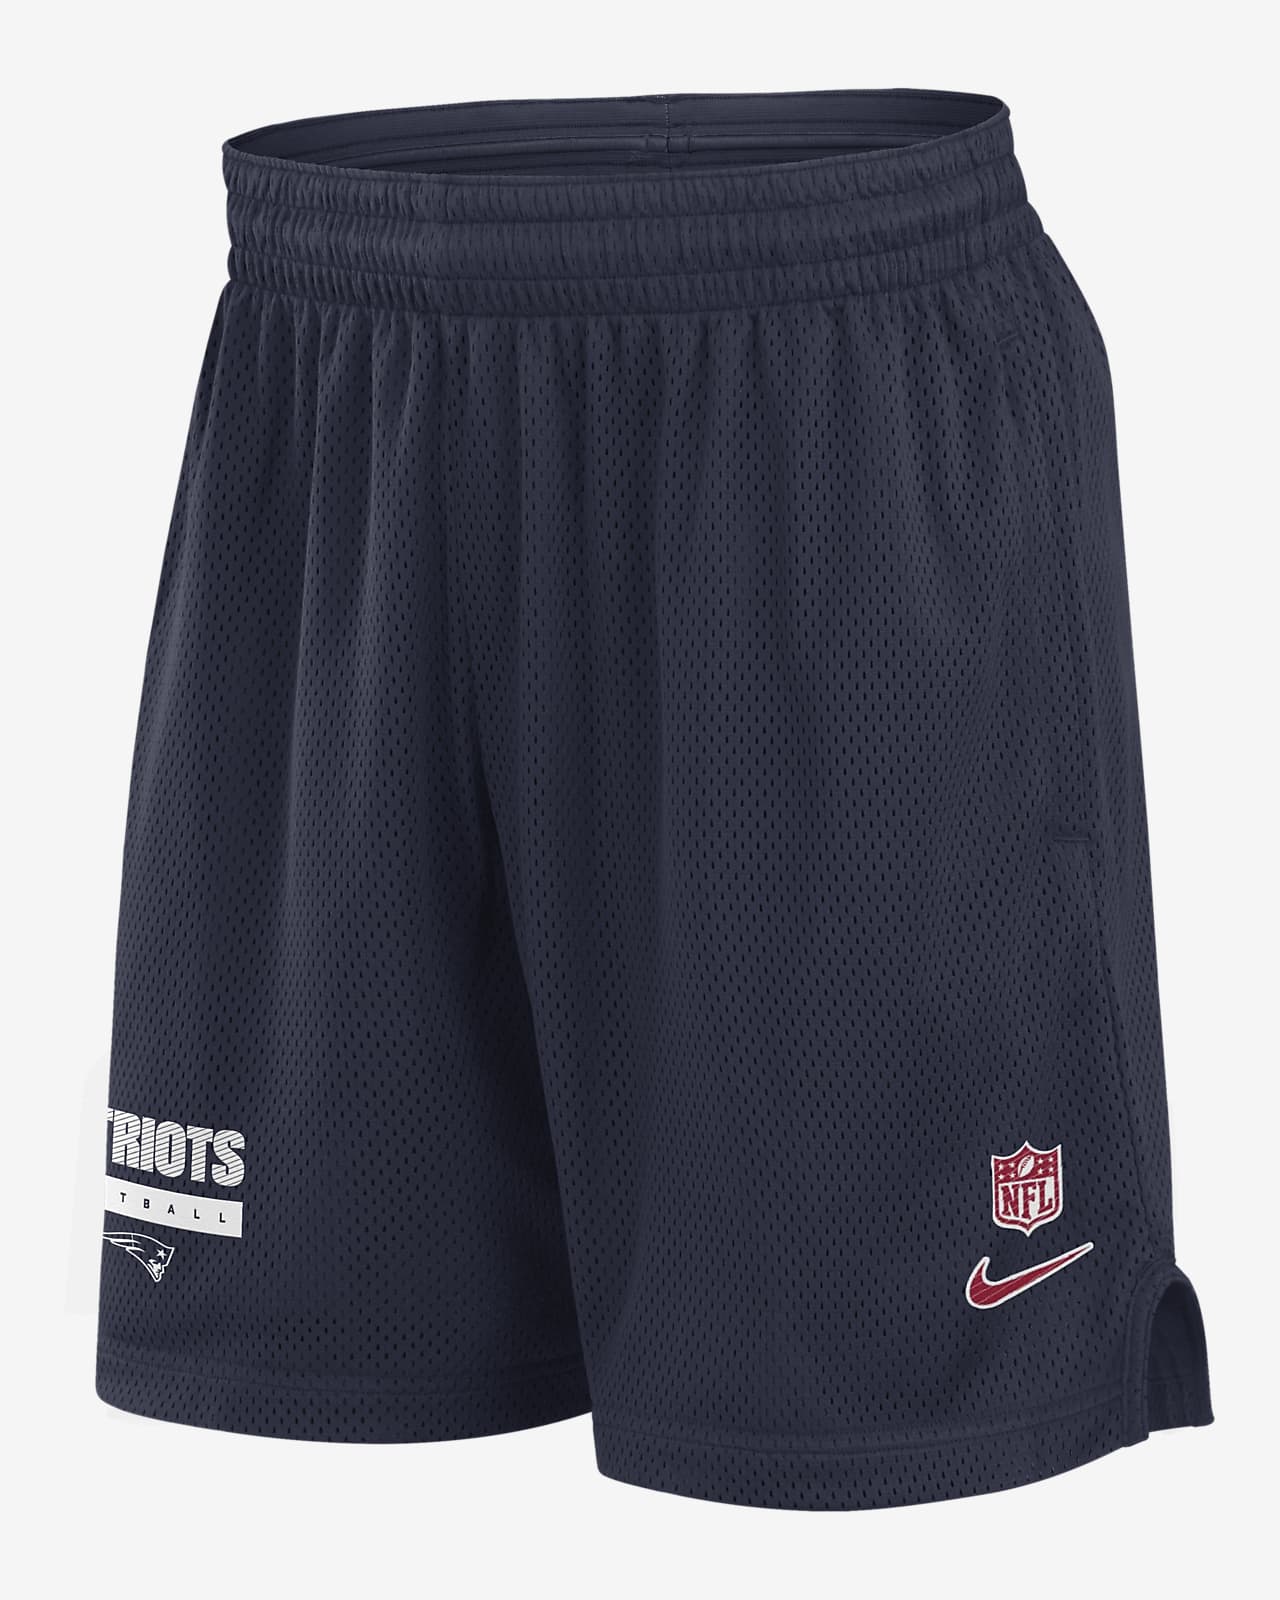 Shorts Nike Dri-FIT de la NFL para hombre New England Patriots Sideline